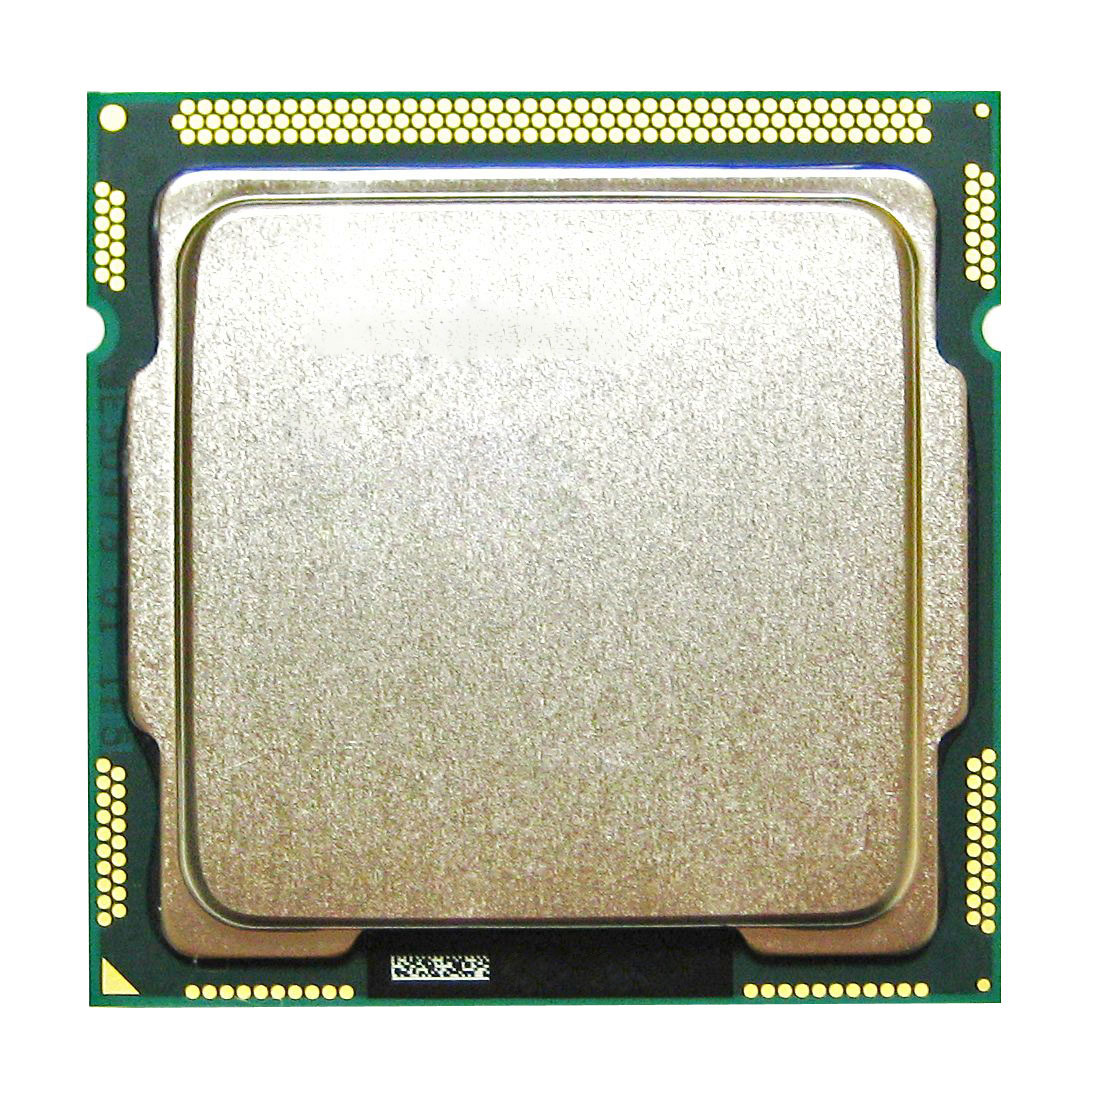 640953-001 HP 2.50GHz 5.00GT/s DMI 6MB L3 Cache Intel Core i5-2400S Quad Core Desktop Processor Upgrade